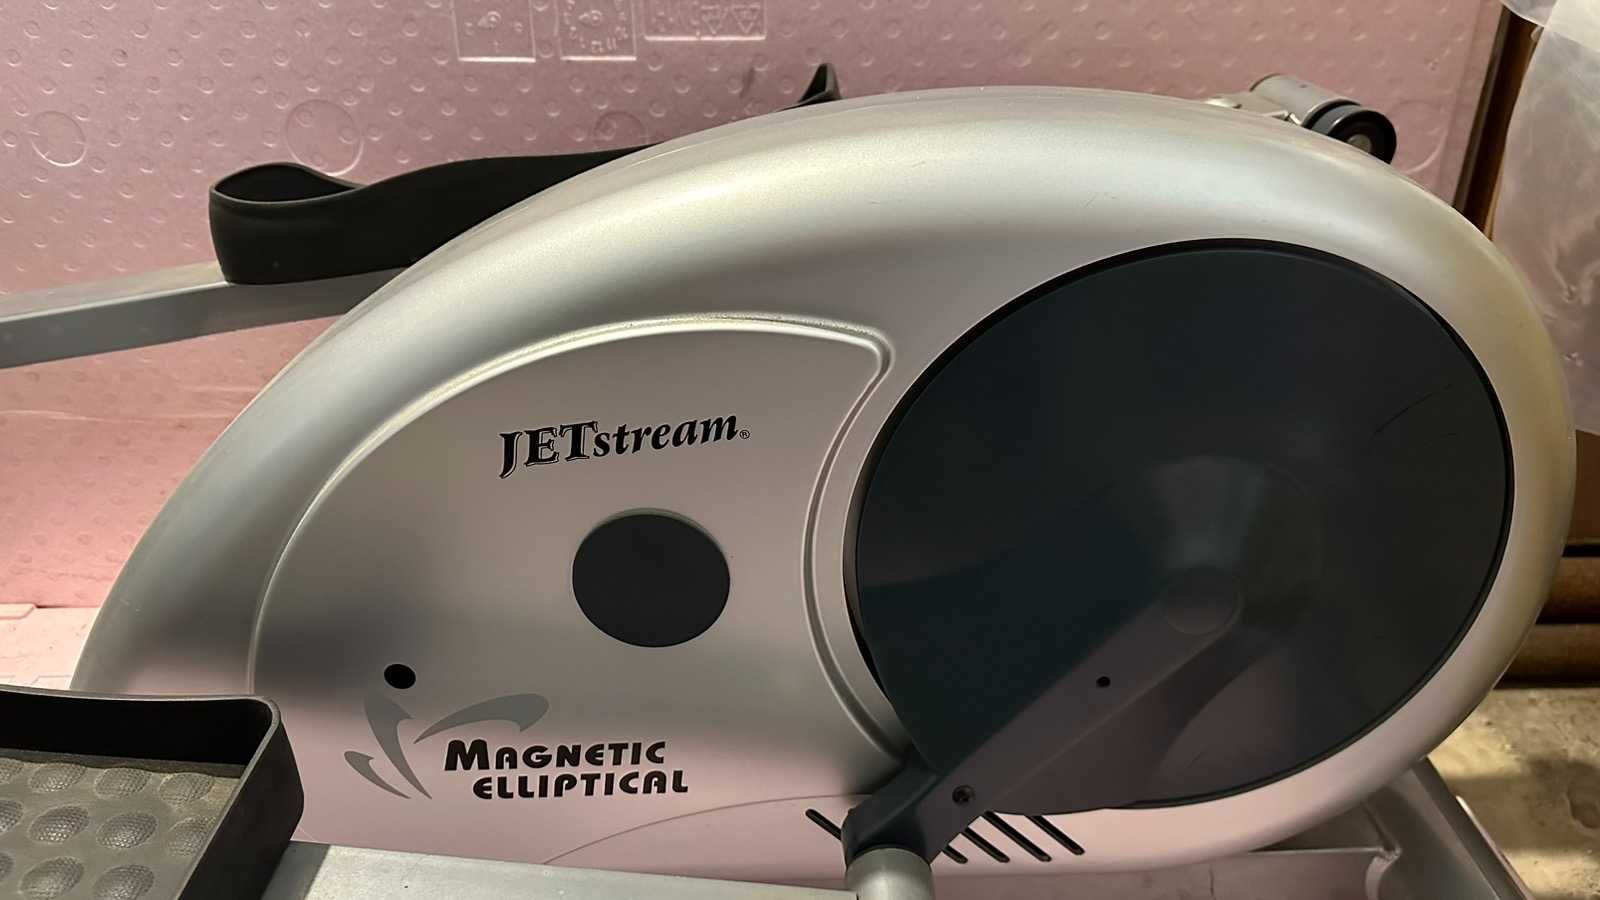 Орбитрек (Jet Stream) magnetic elliptical jec-4205